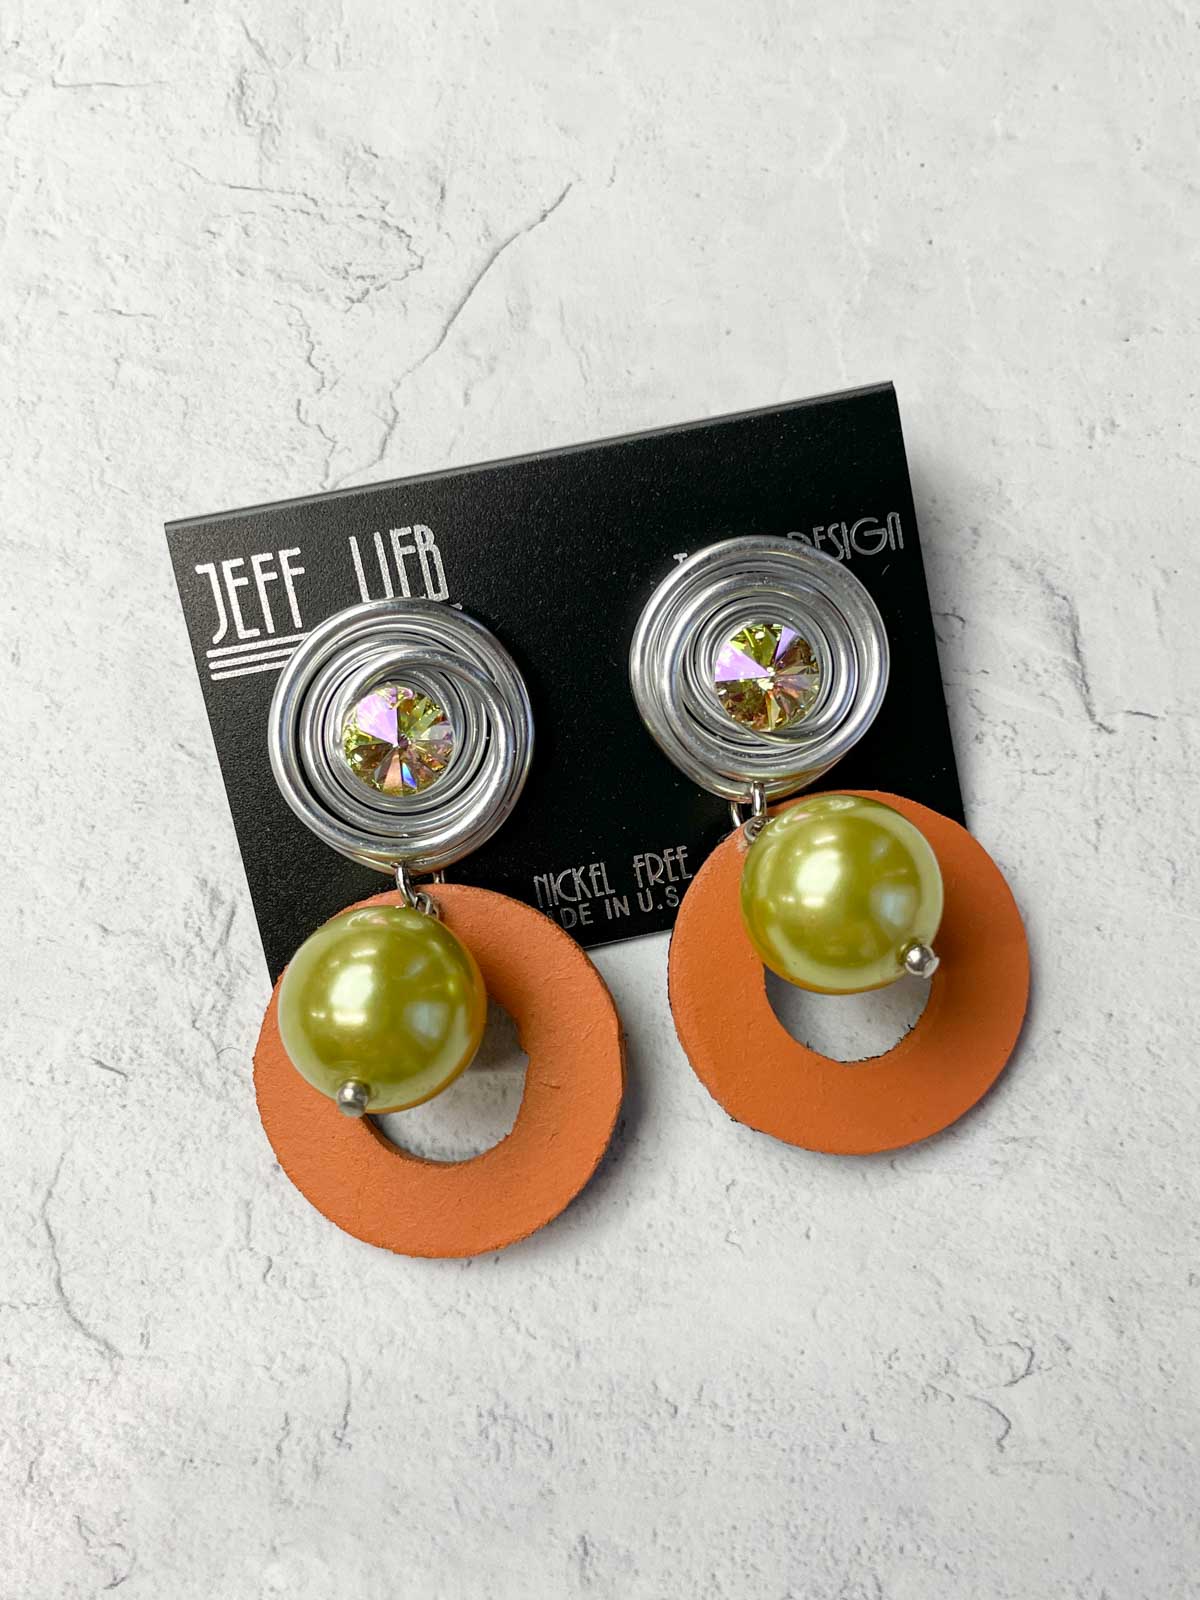 Jeff Lieb Total Design Jewelry Pearl & Wood Dangle Clip On Earrings, Green/Orange - Statement Boutique